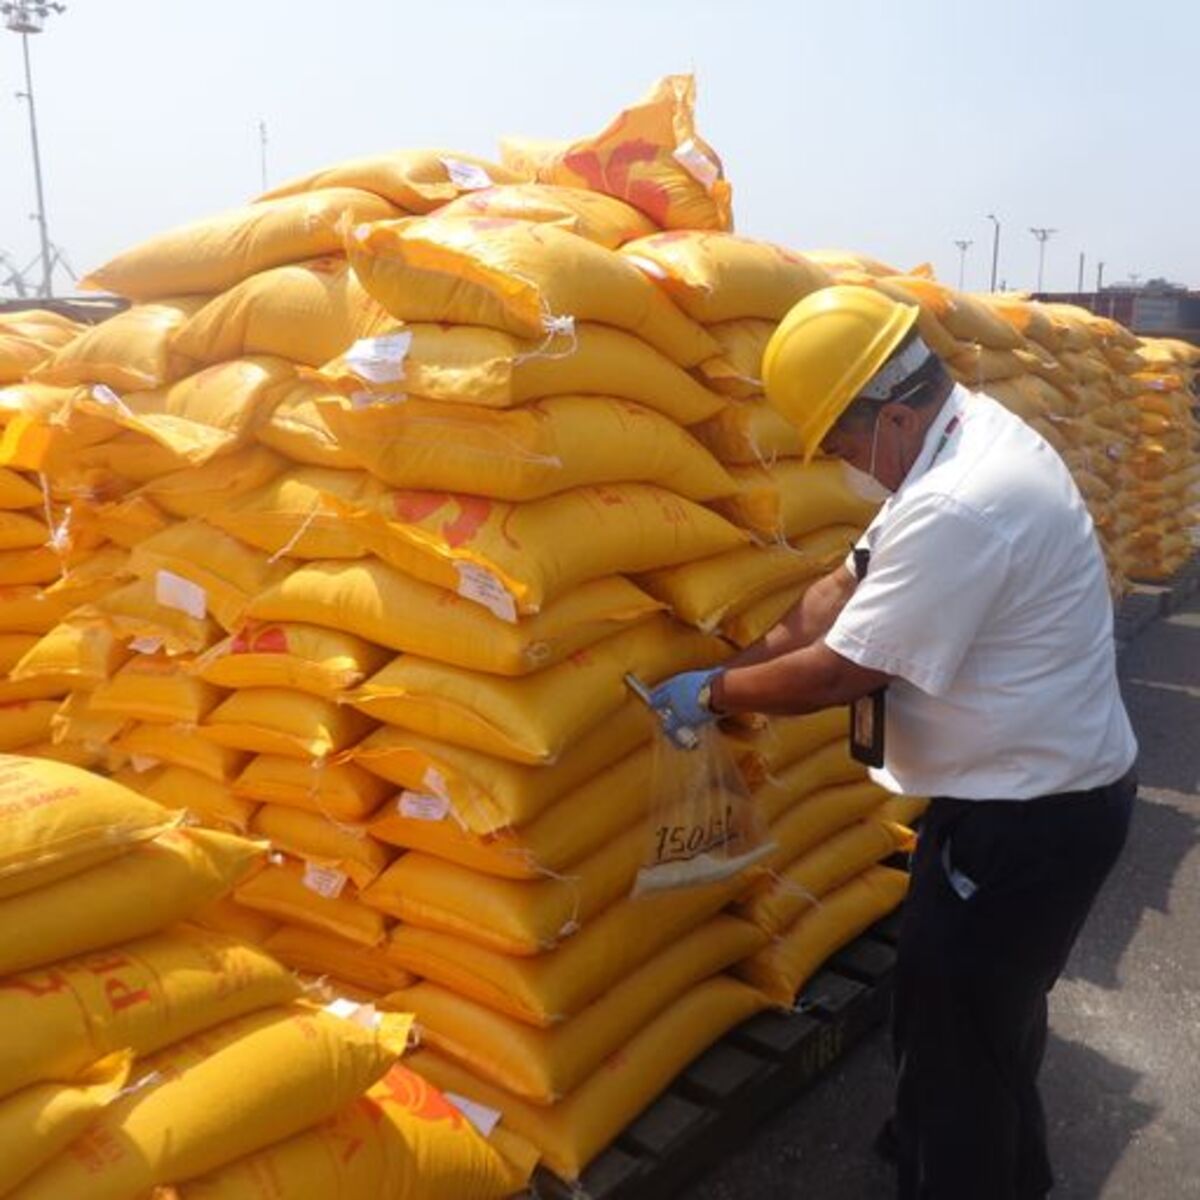 México busca importar arroz de Paraguay de manara segura